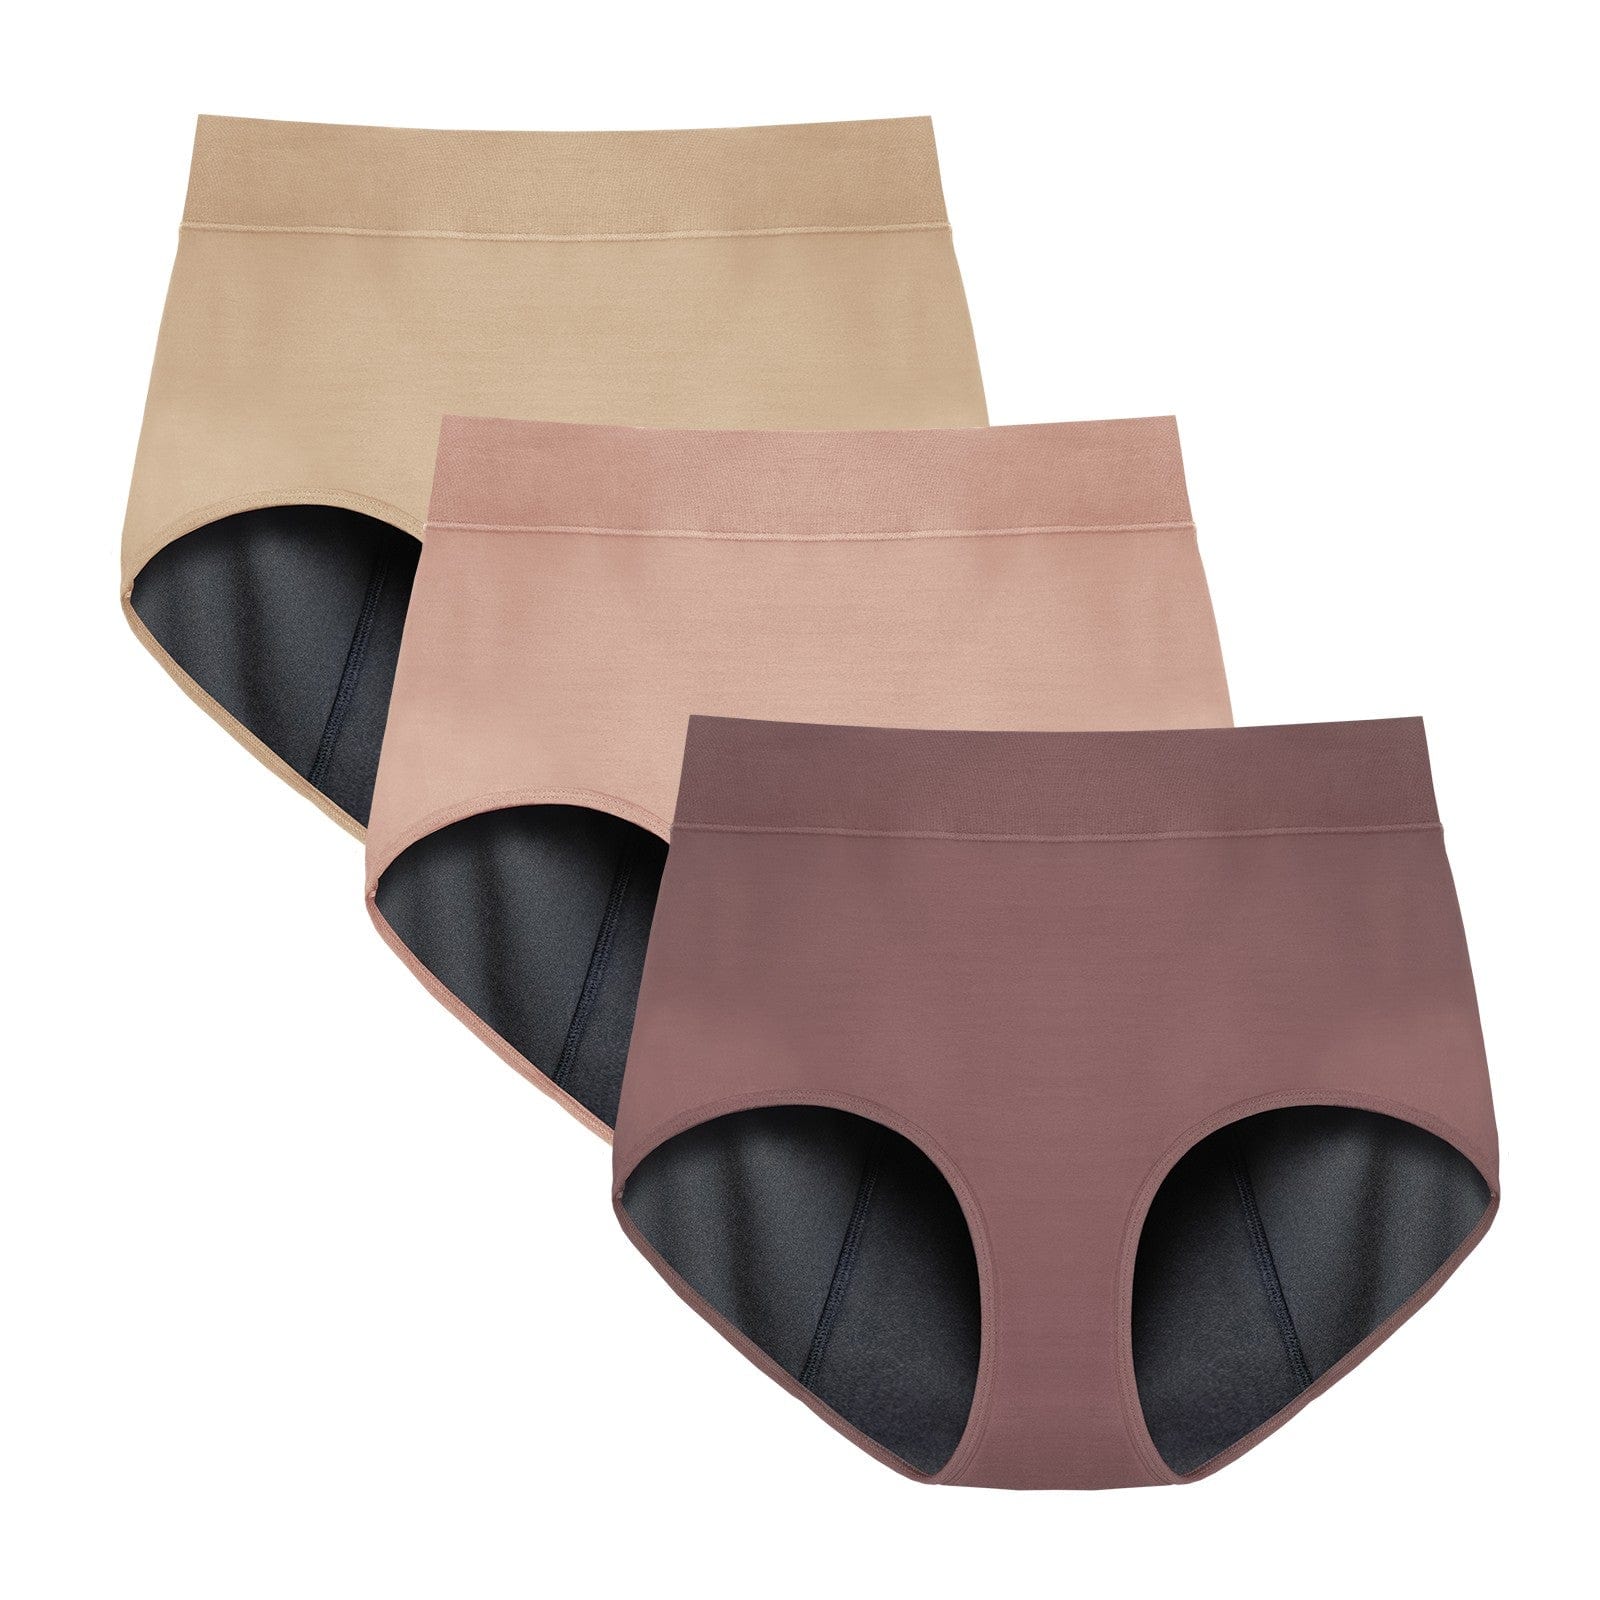 TIICHOO Period Underwear for Women Heavy Flow Extra High Waisted